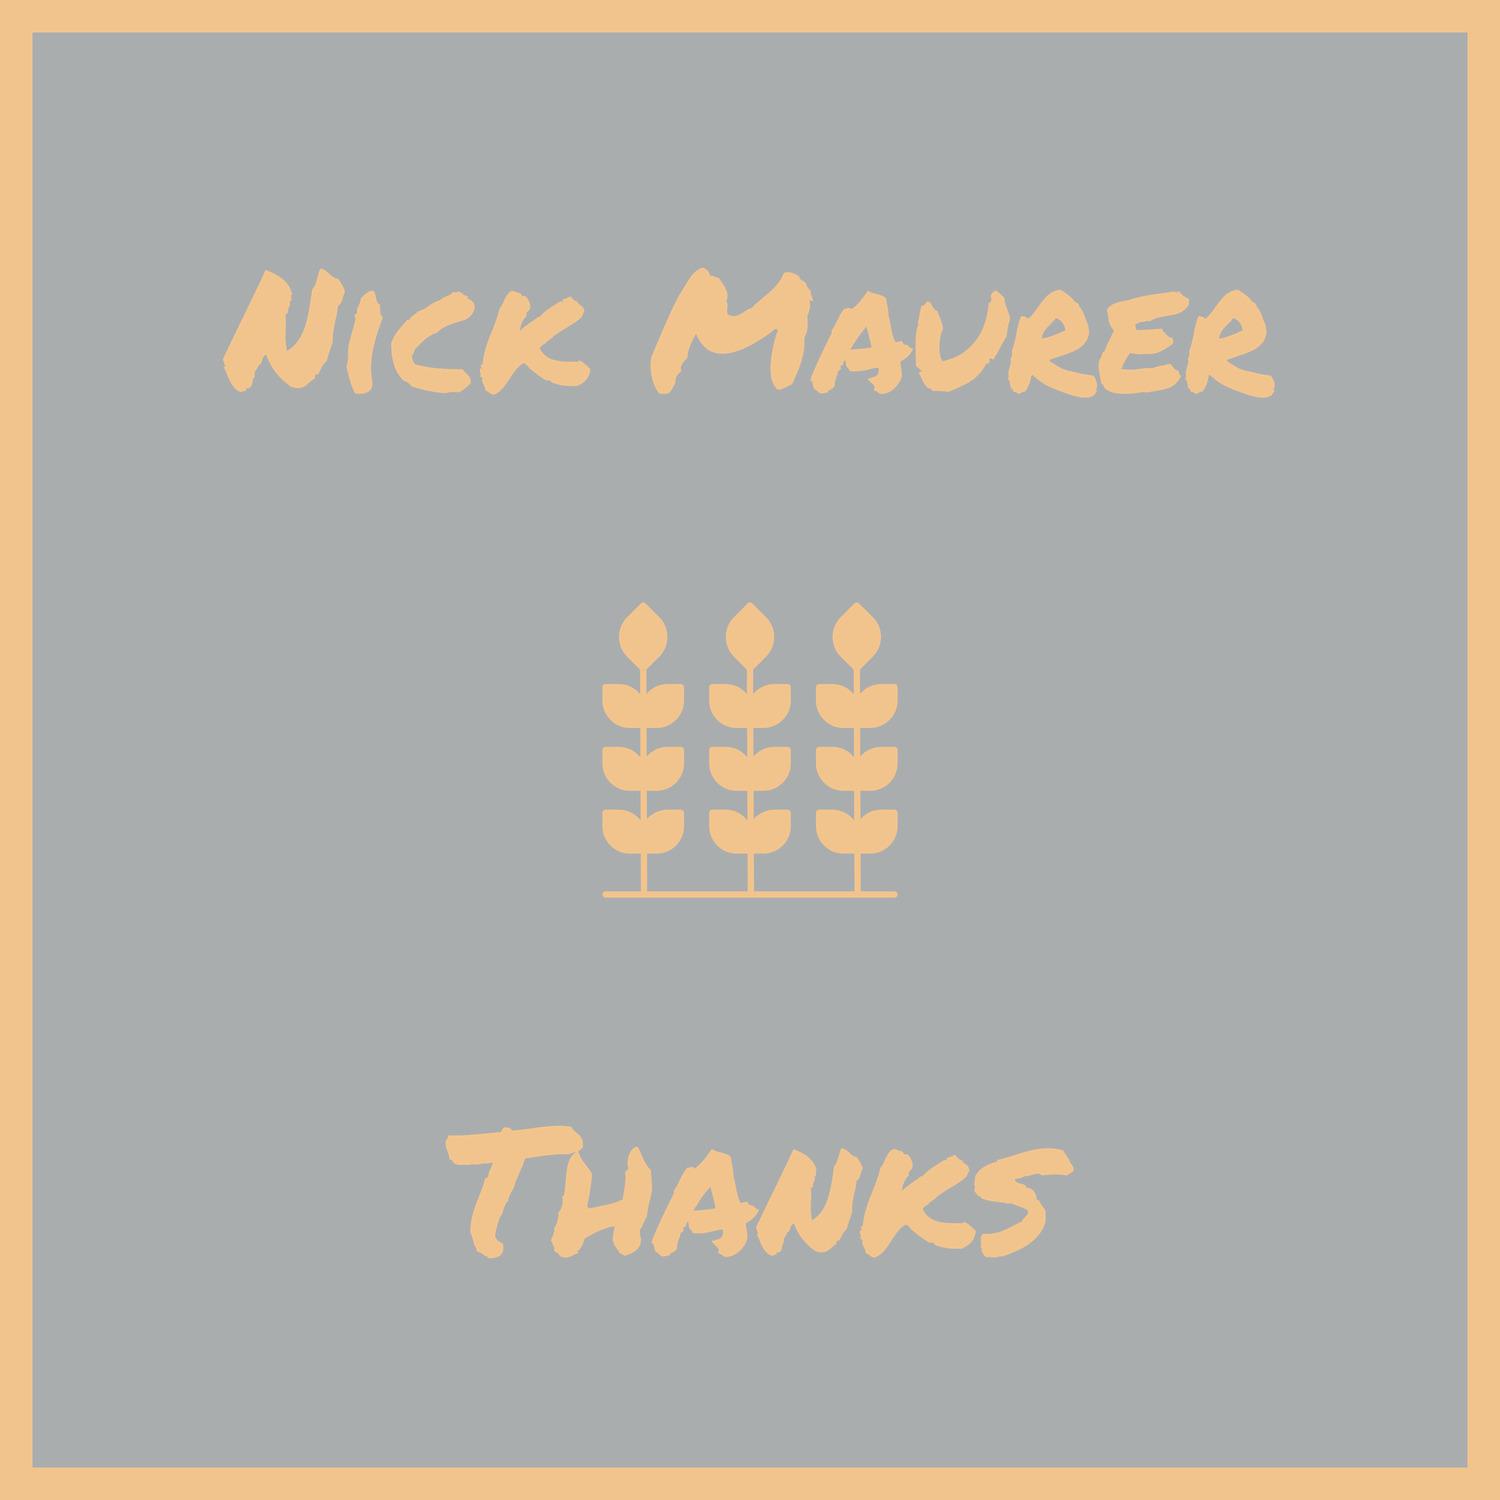 Nick Maurer - Thanks